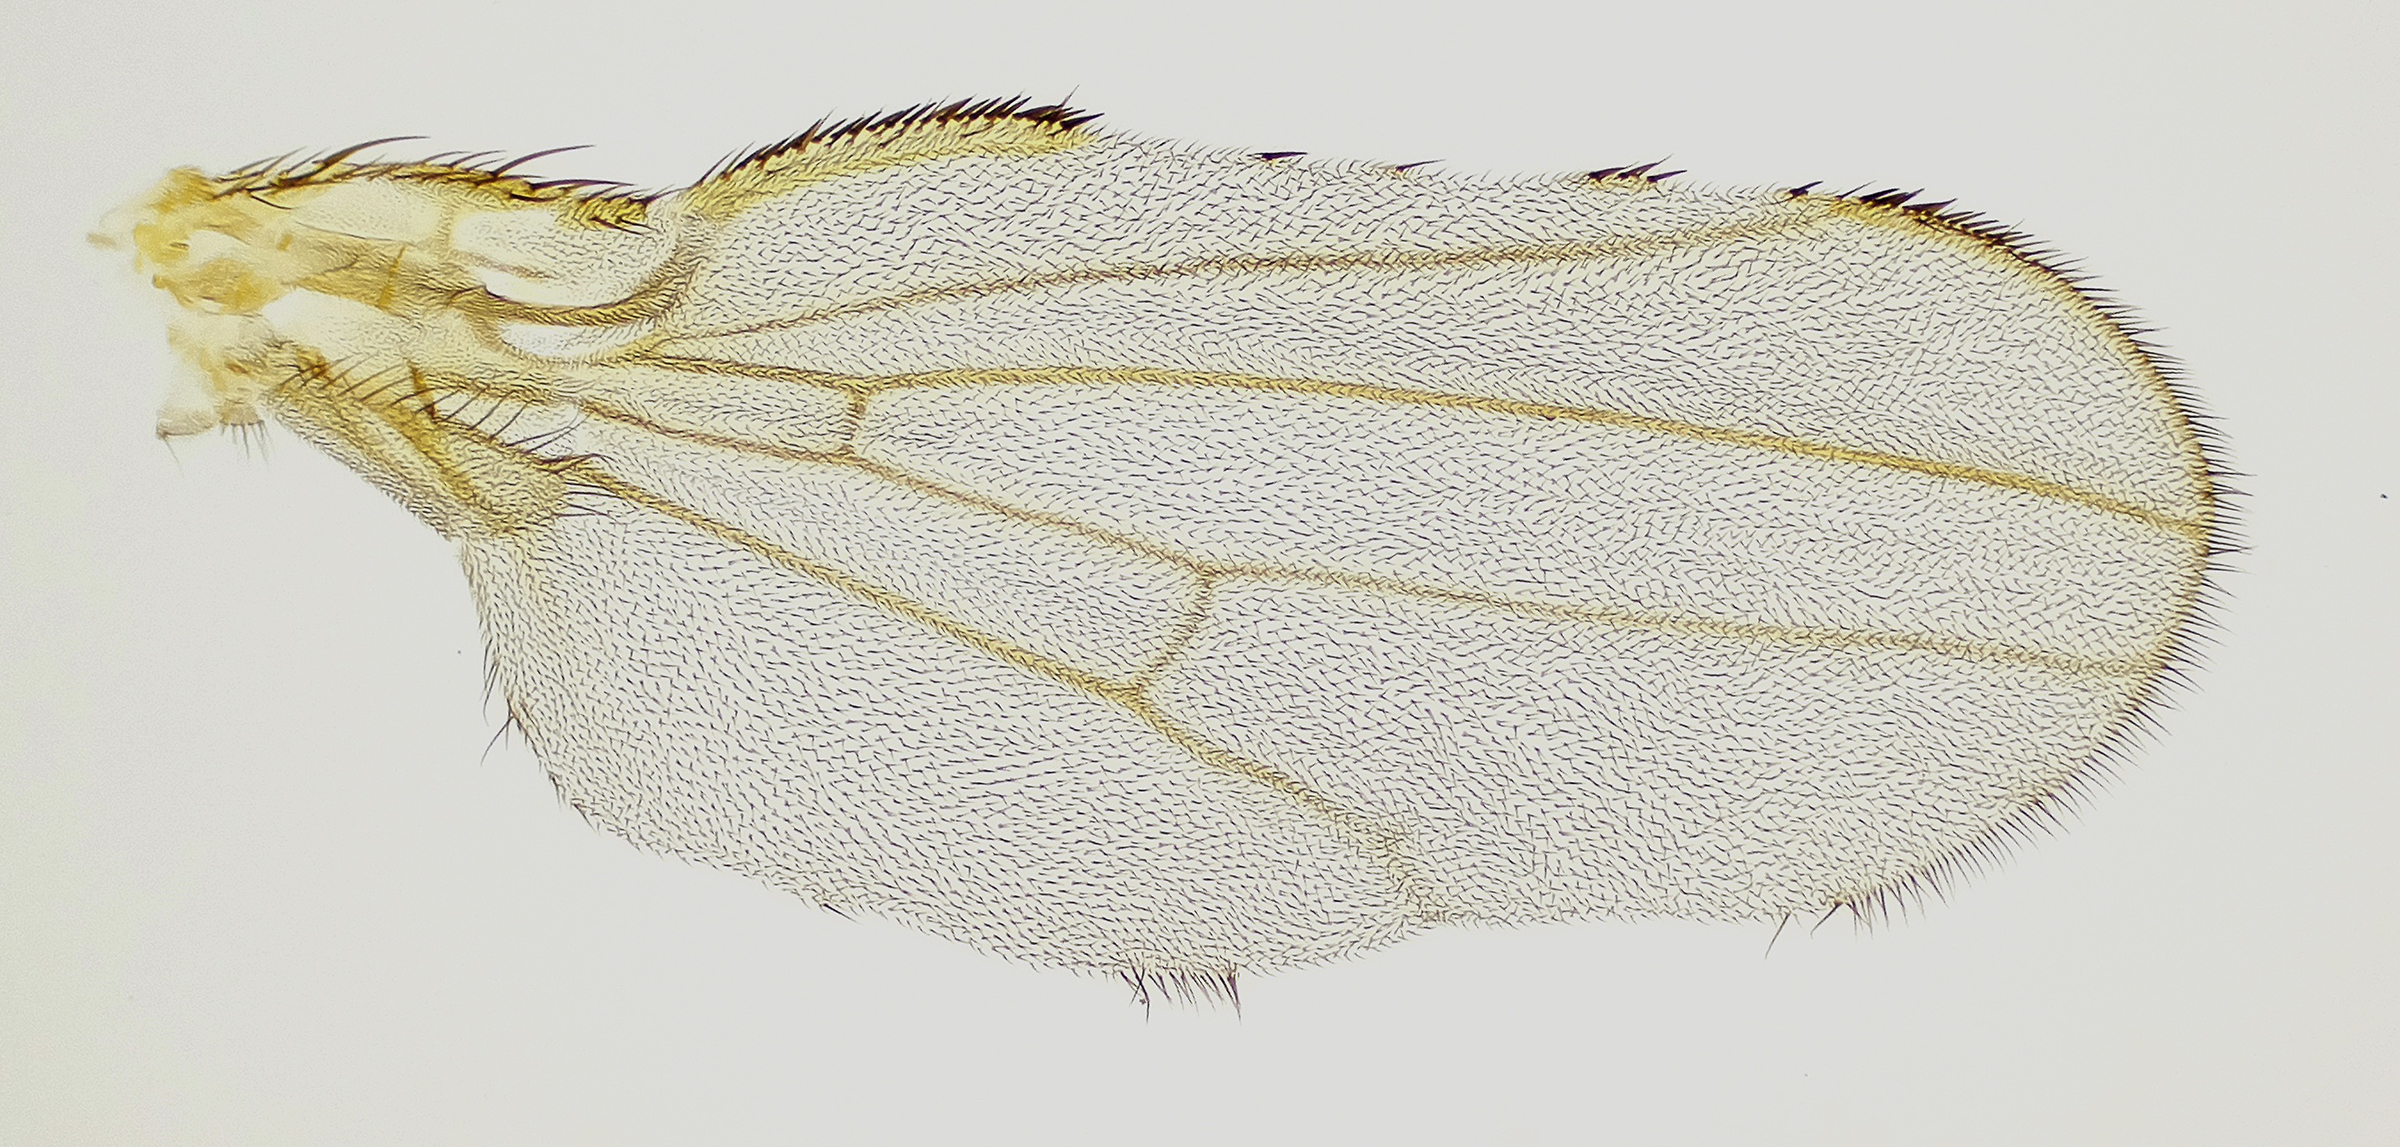 Drosophila wing courtesy of the Smith-Bolton lab